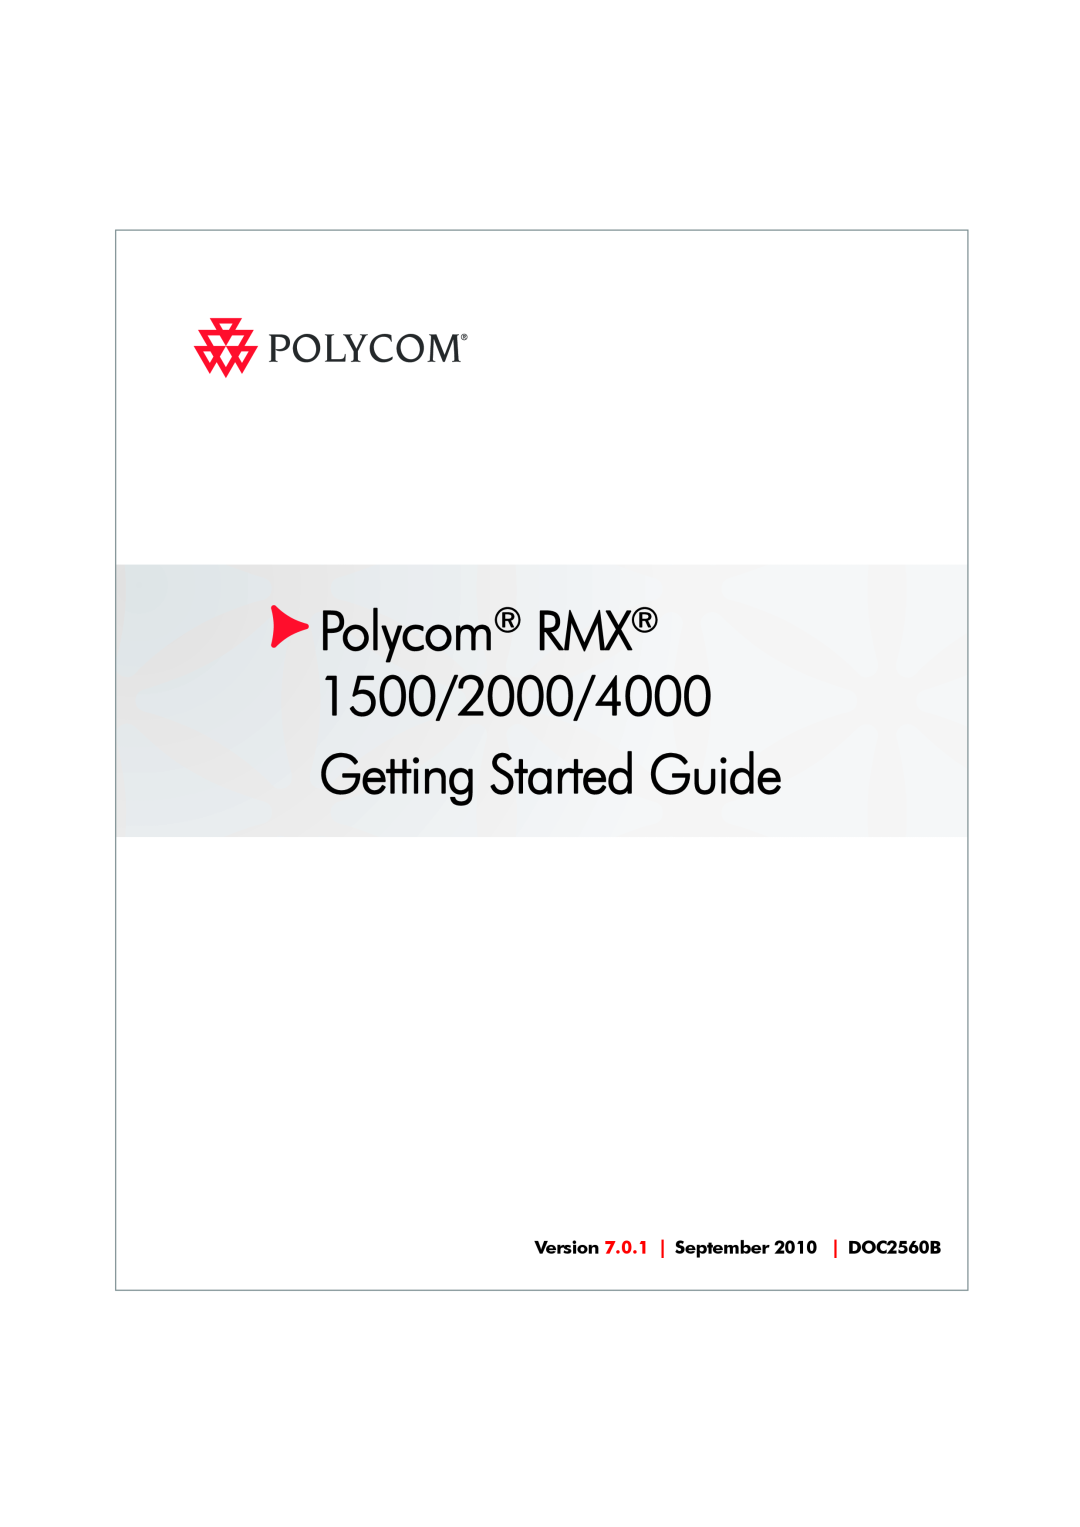 Polycom manual Polycom RMX 1500/2000/4000 Getting Started Guide, Version 7.0.1 September 2010 DOC2560B 